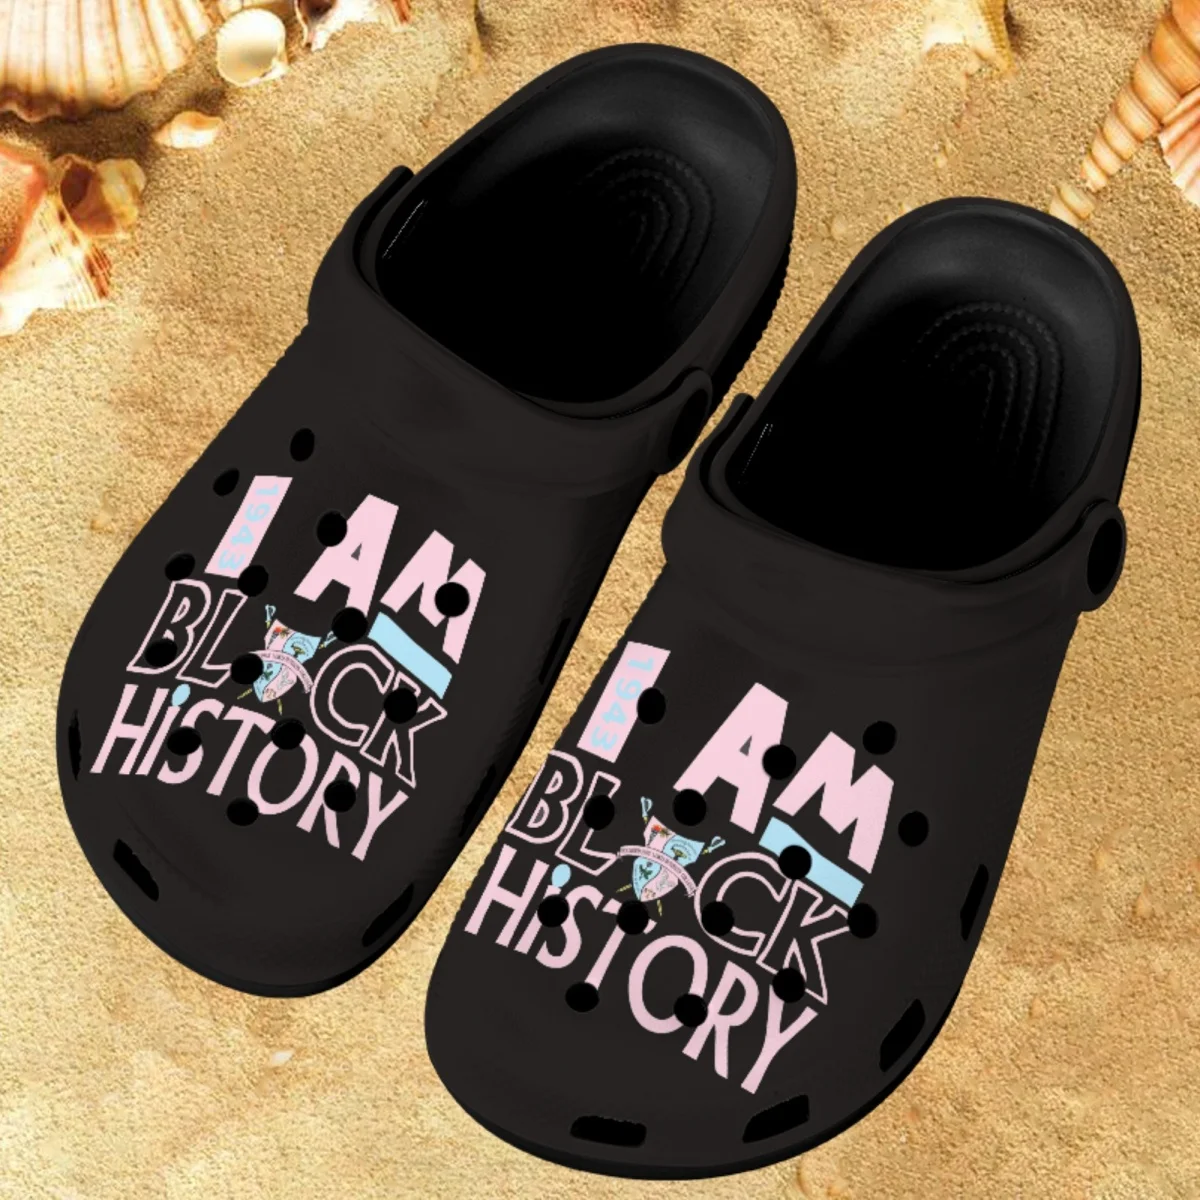 

Women's Sandals Anti-slip Gamma Phi Delta I AM Black History Sorority Breathable Adults Home Slippers Bathroom Casual Comfort